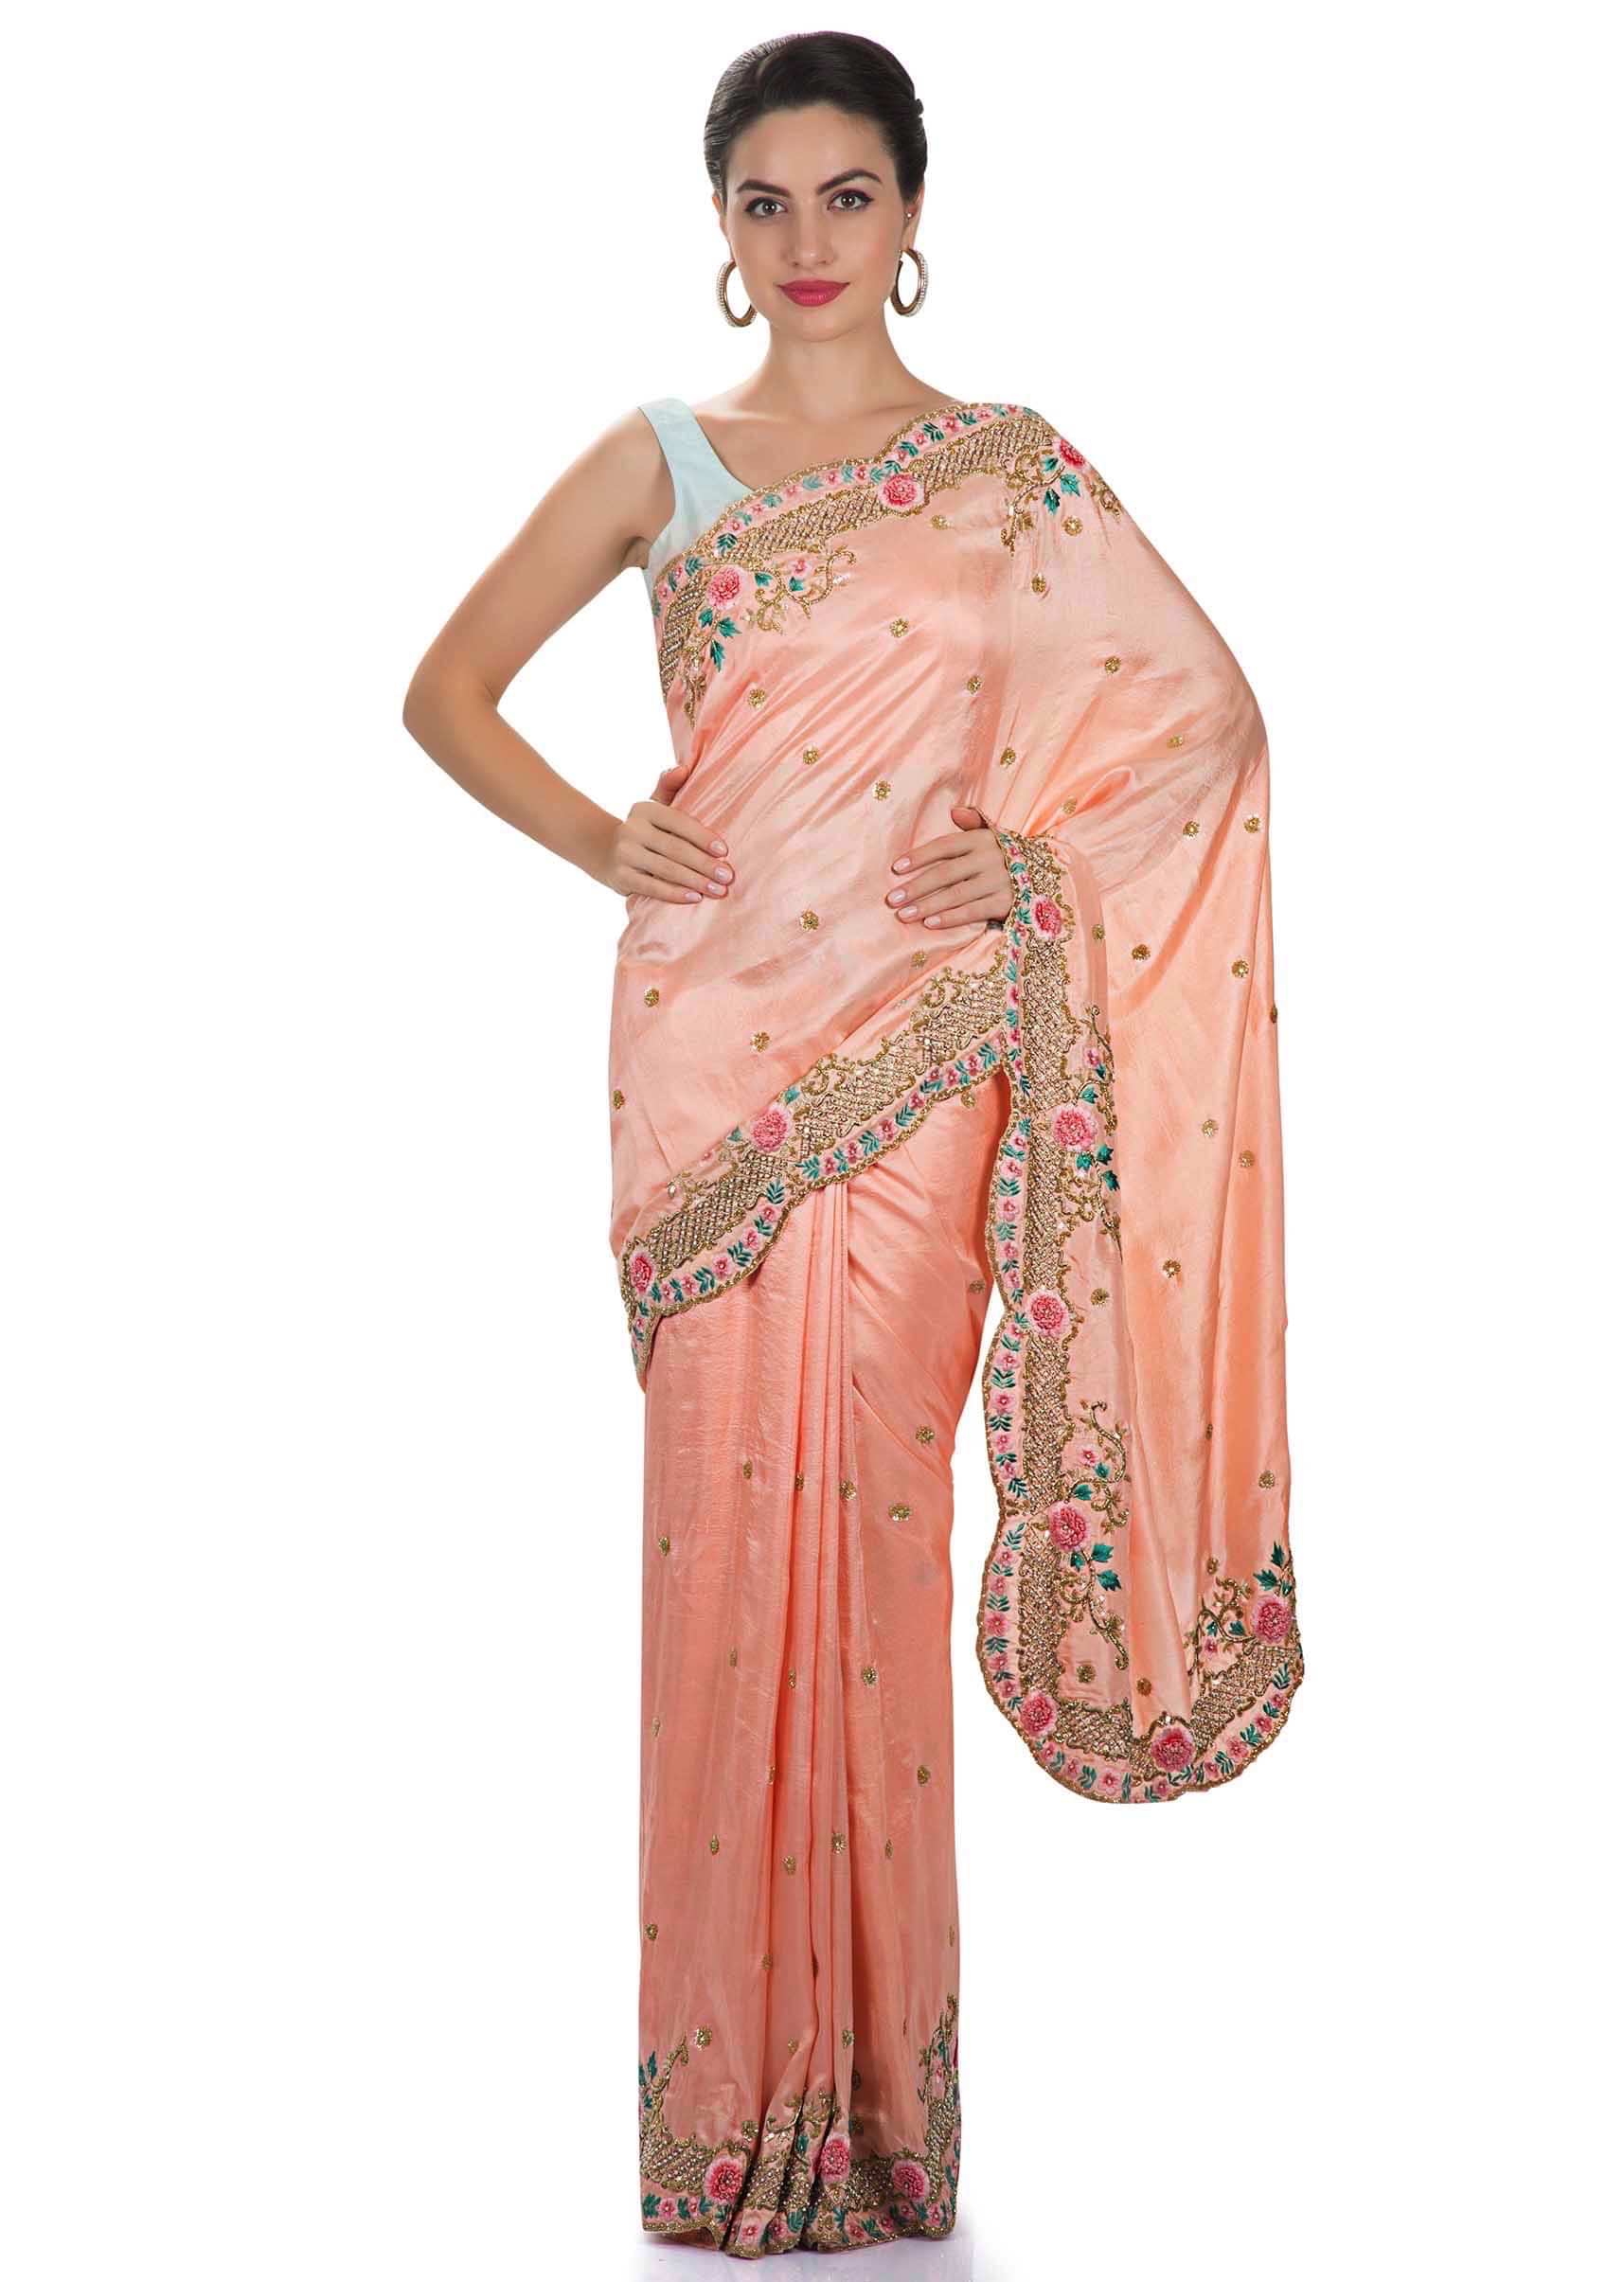 Blush pink satin chiffon saree with resham and zardosi flower pattern only on Kalki